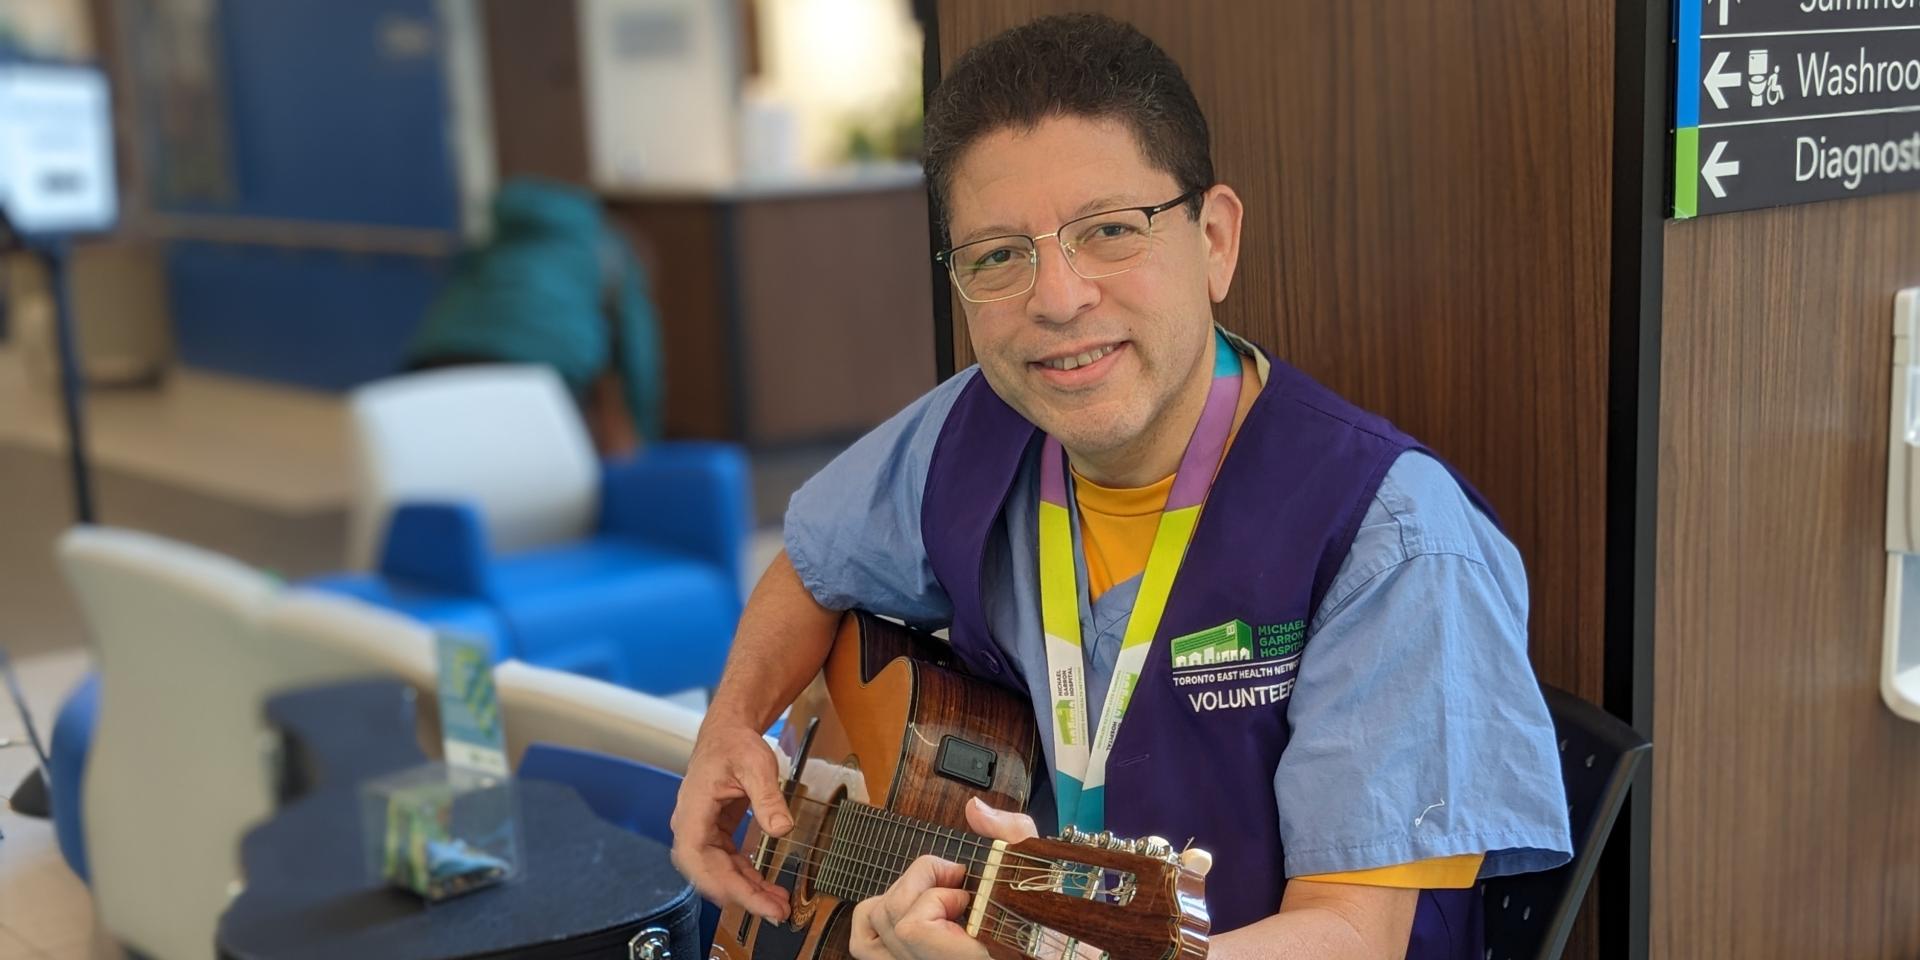 Nursing attendant José Blanco Mendez shares his talent in our hospital lobby